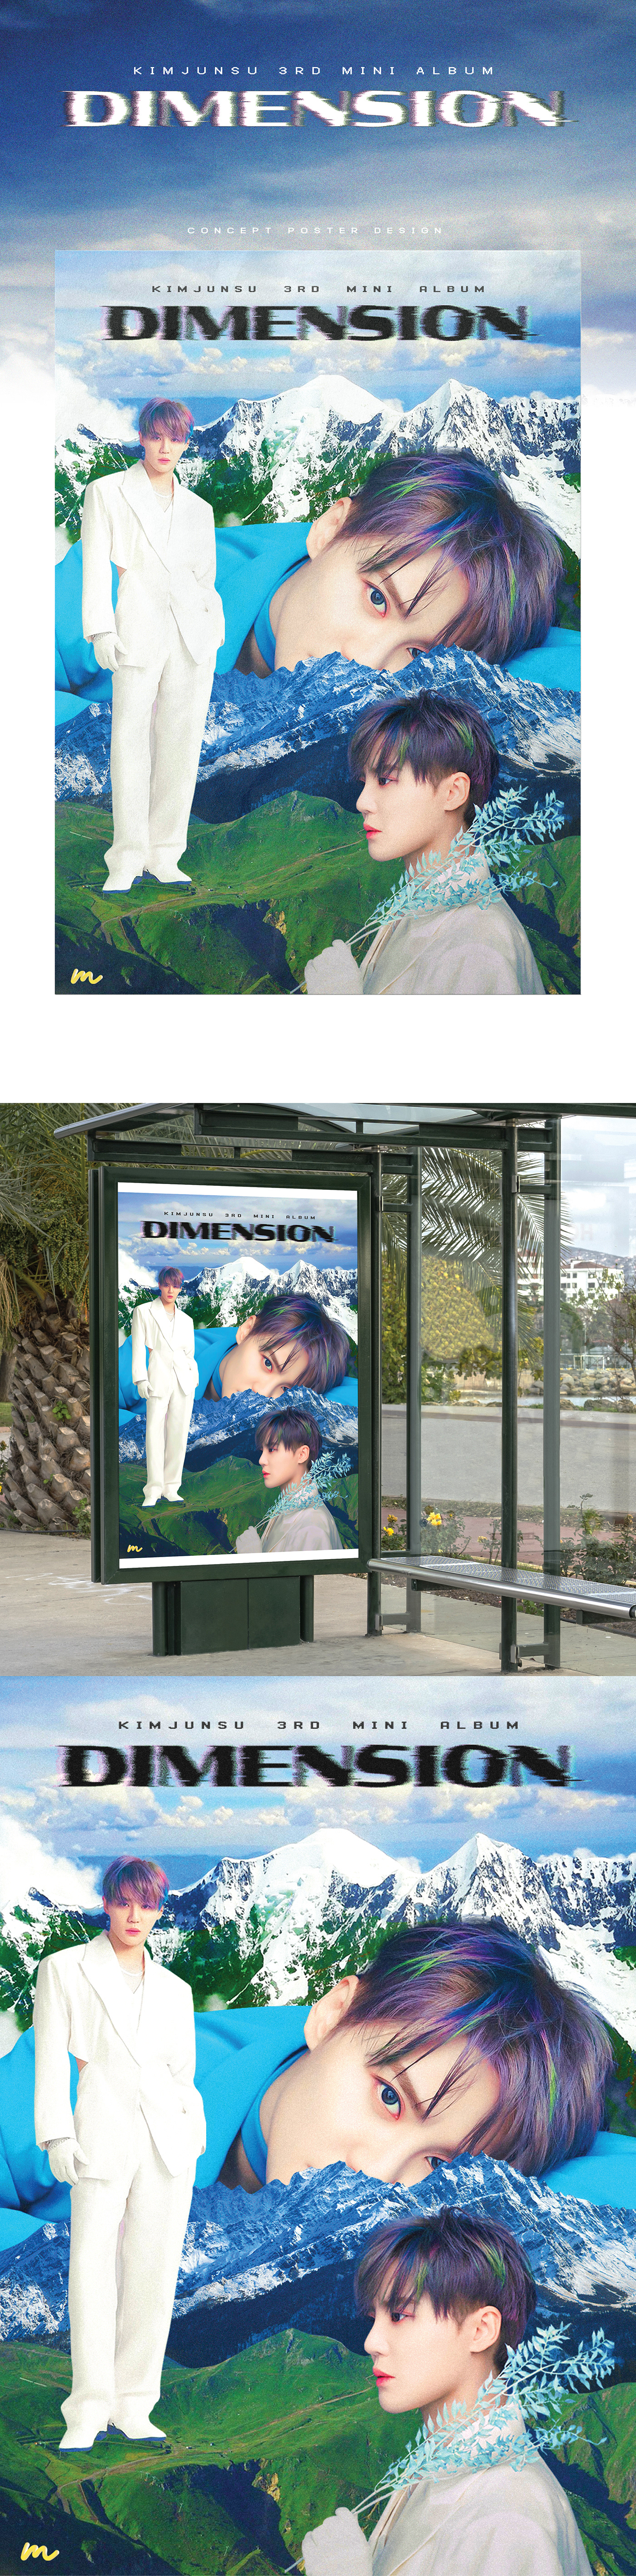 conceptposter design dimension kpop poster xia XIAJUNSU 김준수 아이돌 포스터